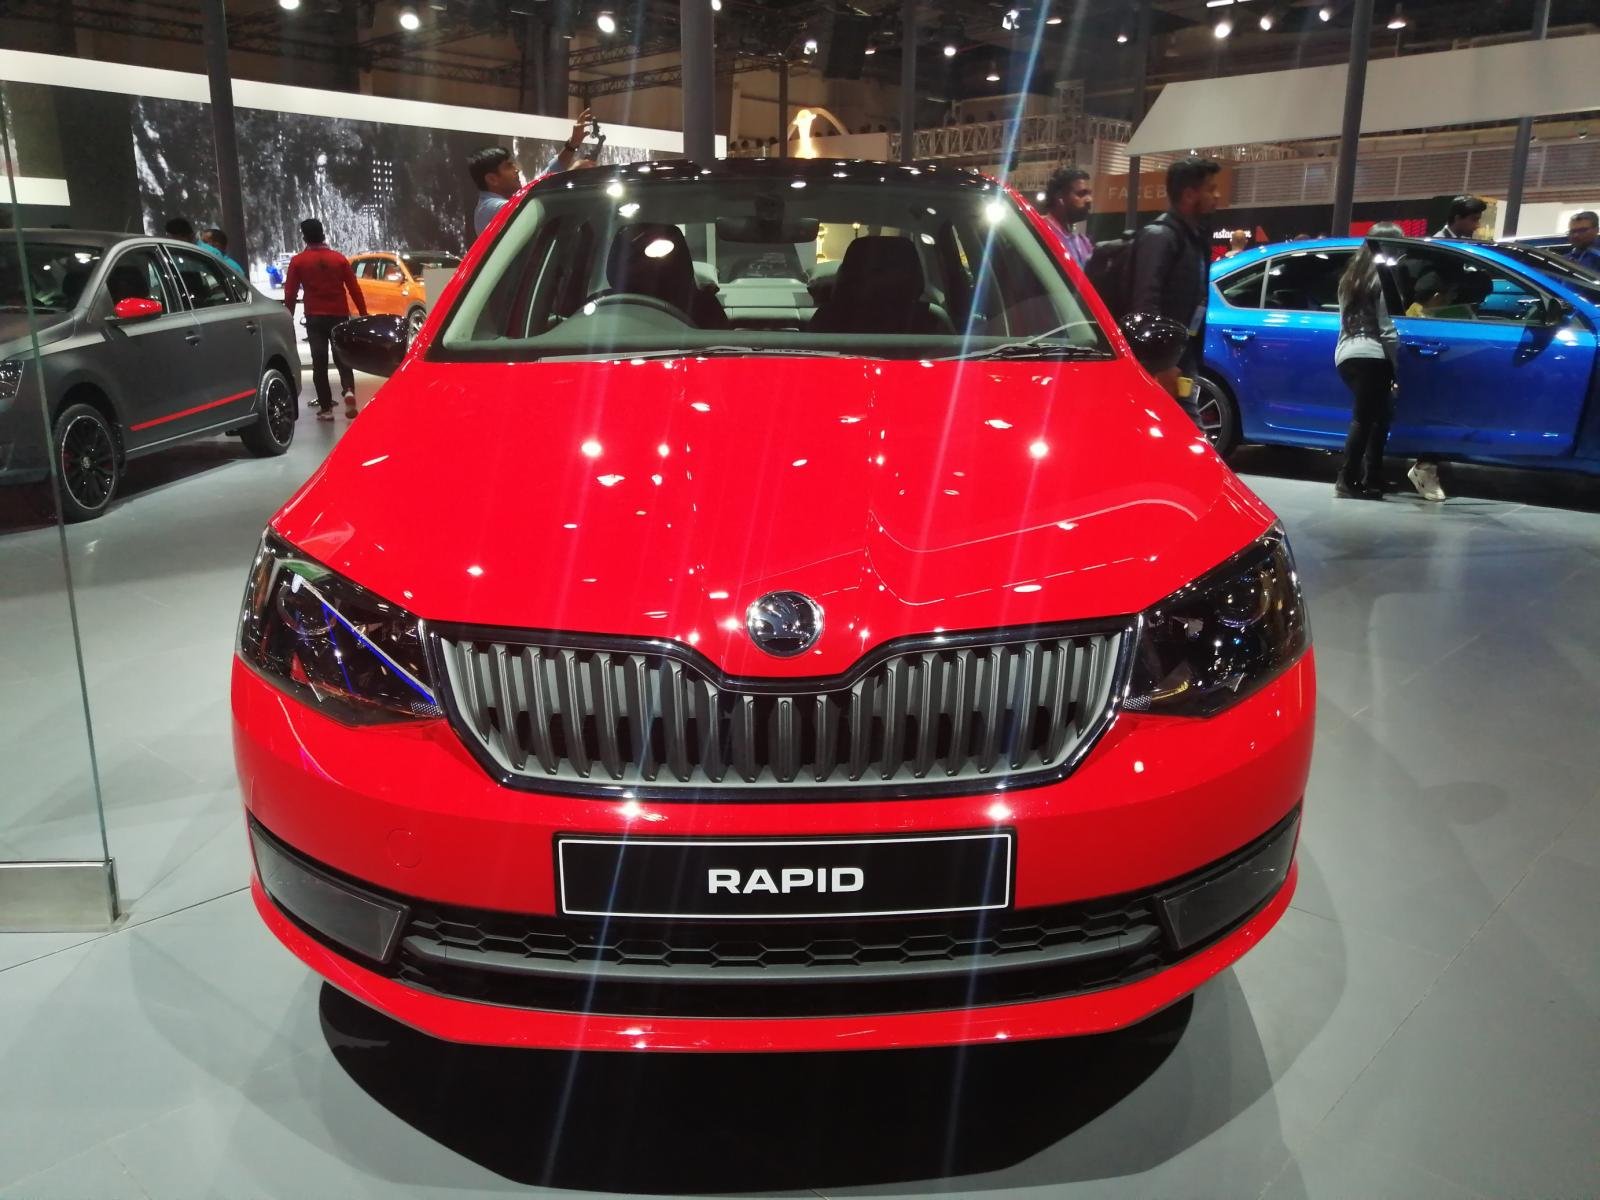 Skoda Rapid showcased at Auto Expo 2020